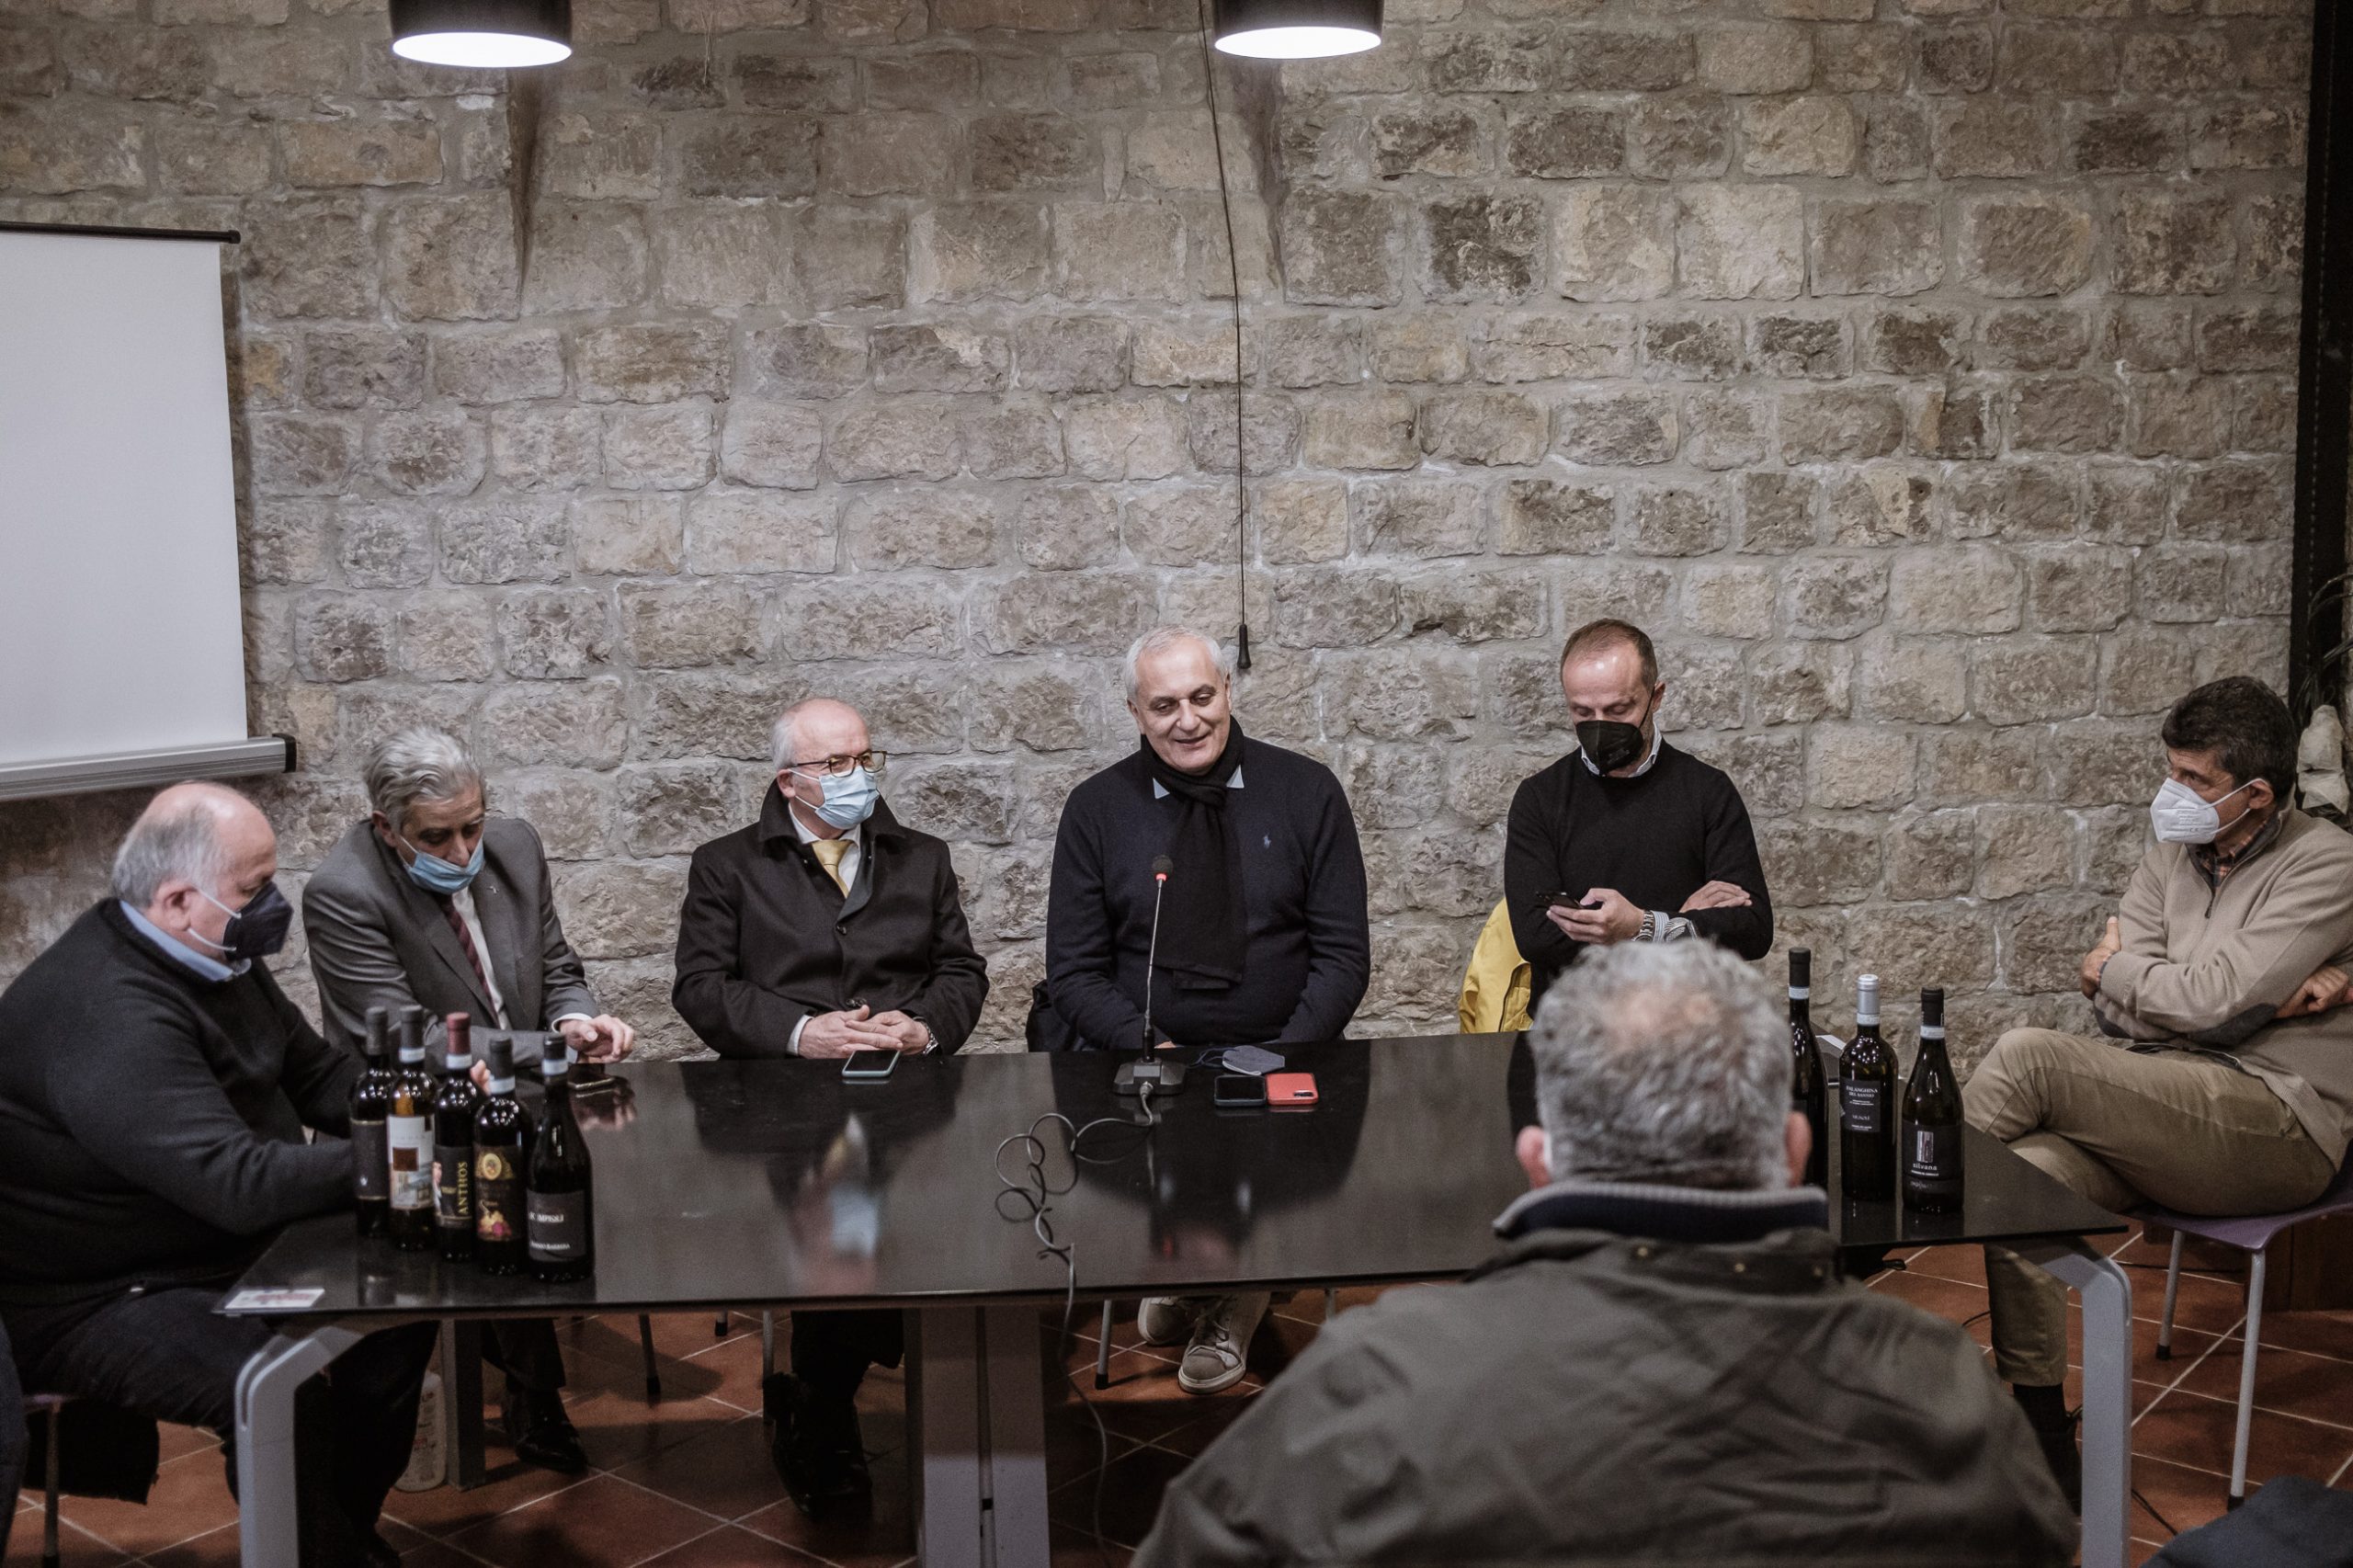 L’assessore regionale Caputo a Castelvenere: “Quale futuro per i vini campani?